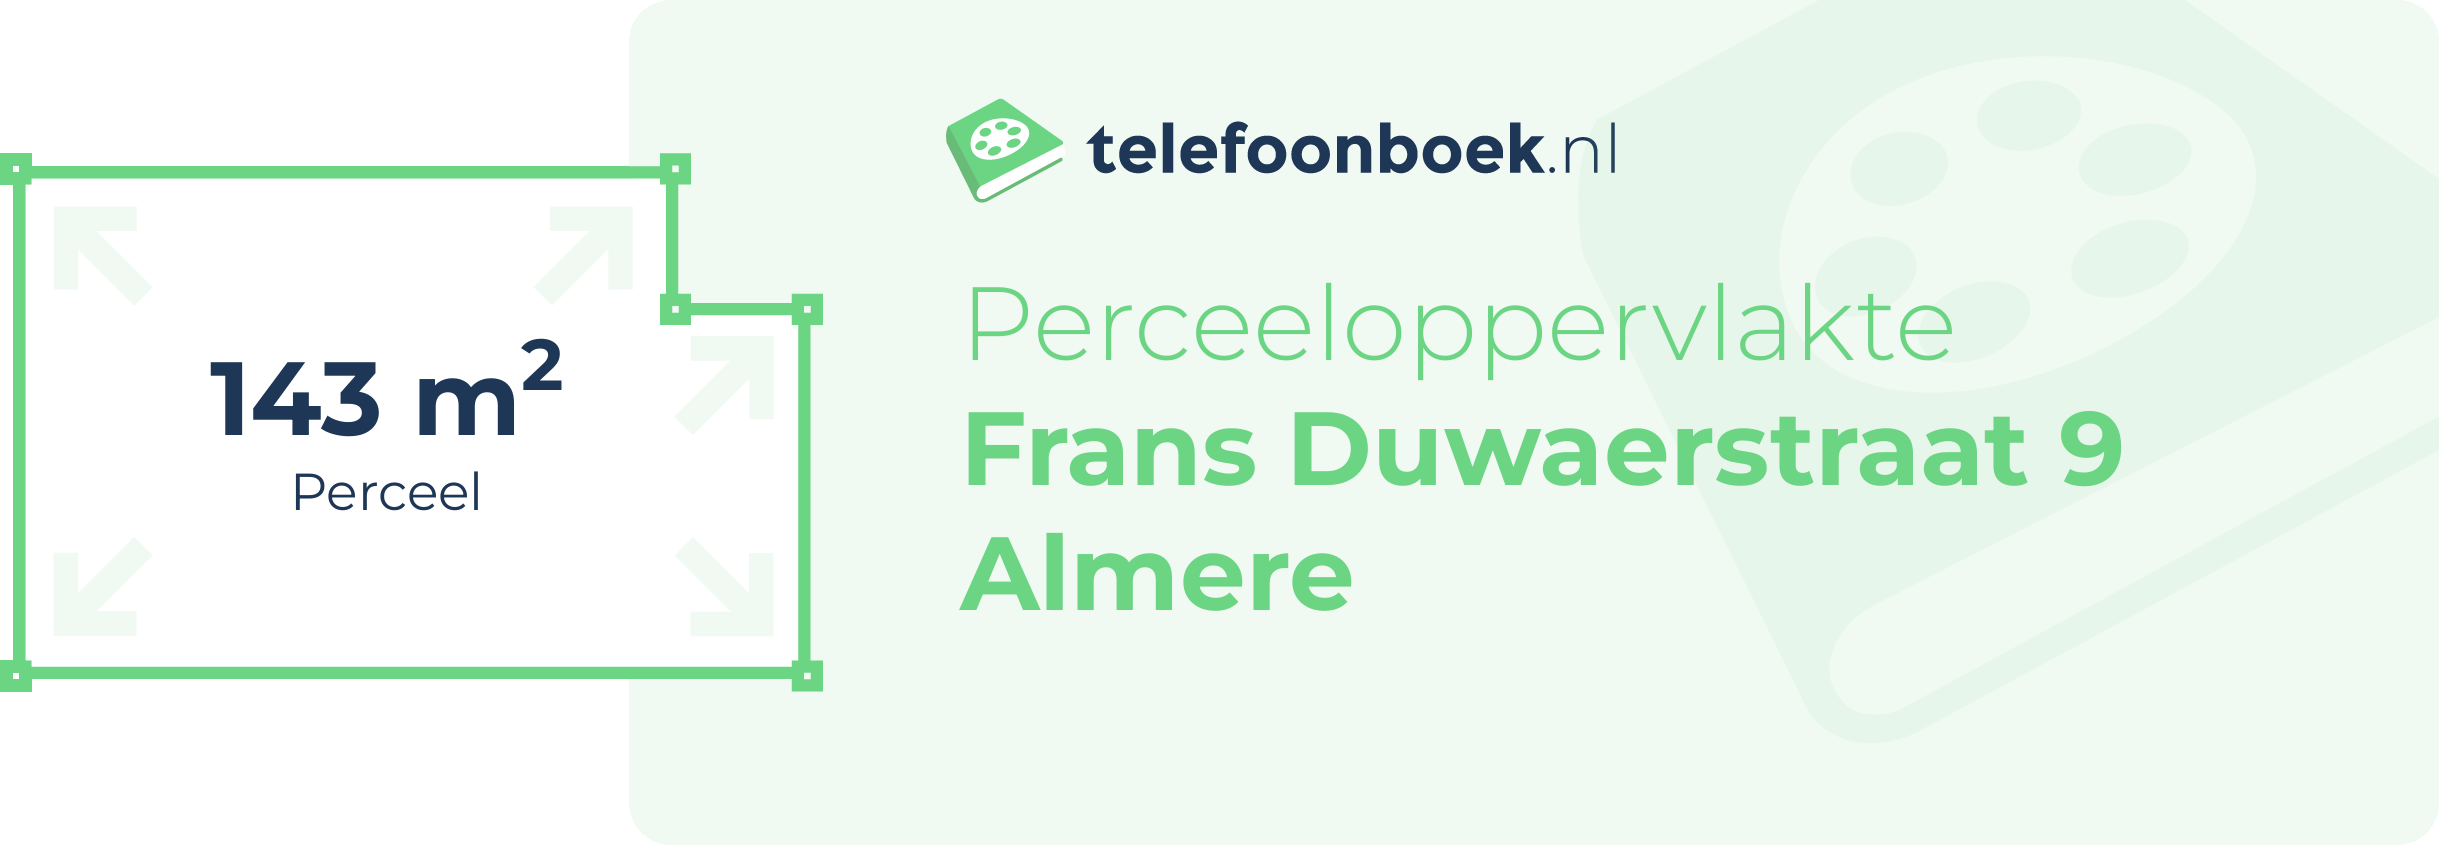 Perceeloppervlakte Frans Duwaerstraat 9 Almere